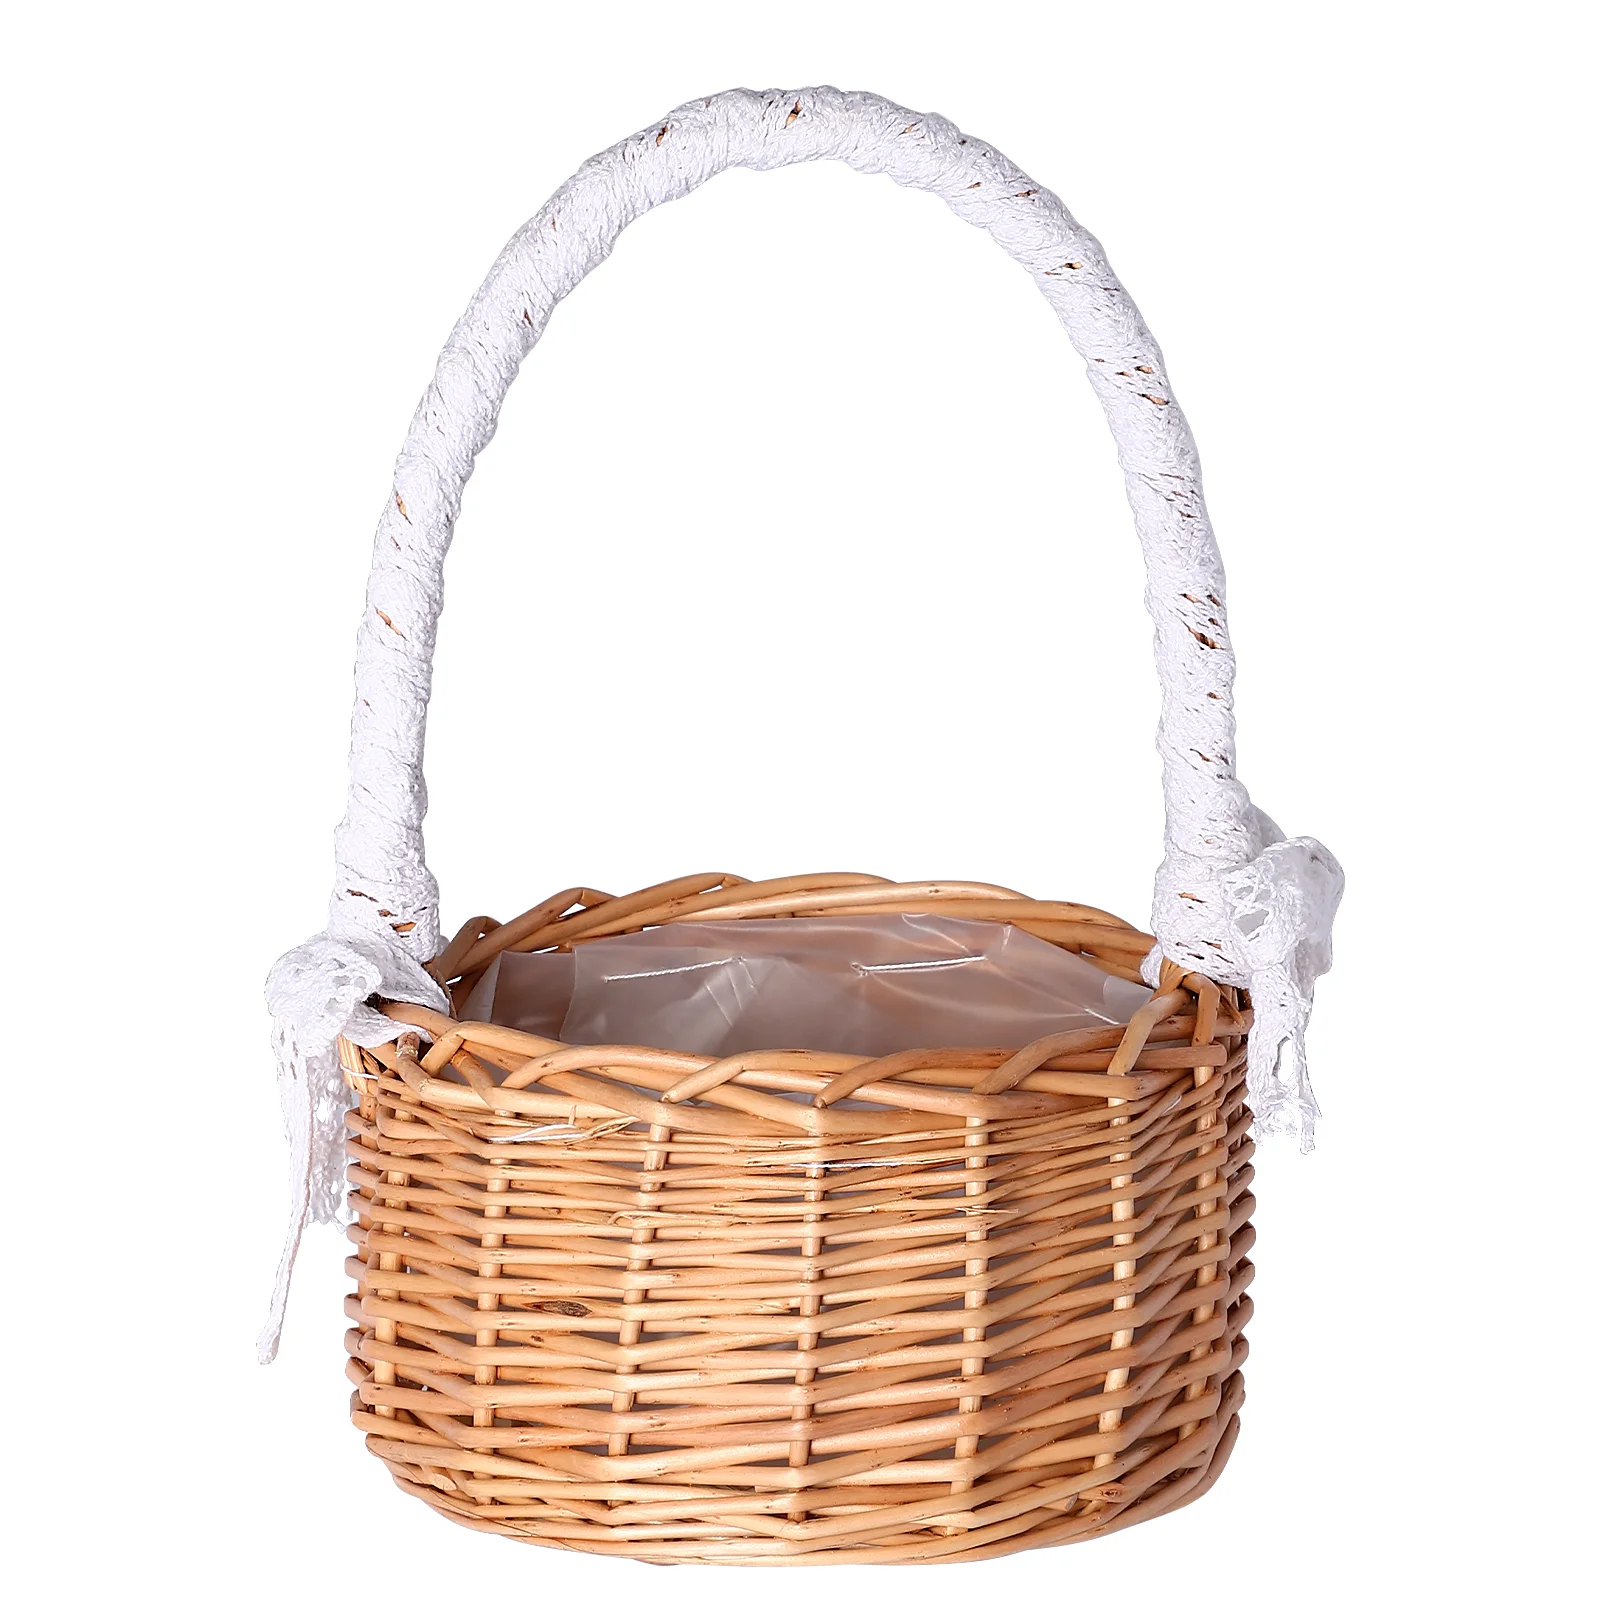 

Basket Baskets Flower Wicker Picnic Handles Rattan Mini Empty Gift Handle Garden Berry Set Girl Home Wedding Decor Lace Foraging